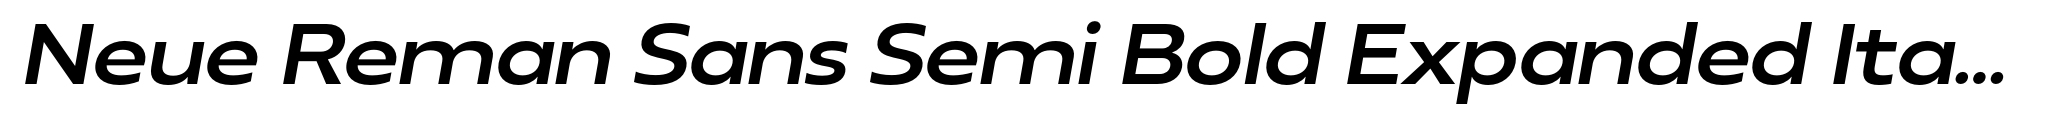 Neue Reman Sans Semi Bold Expanded Italic image